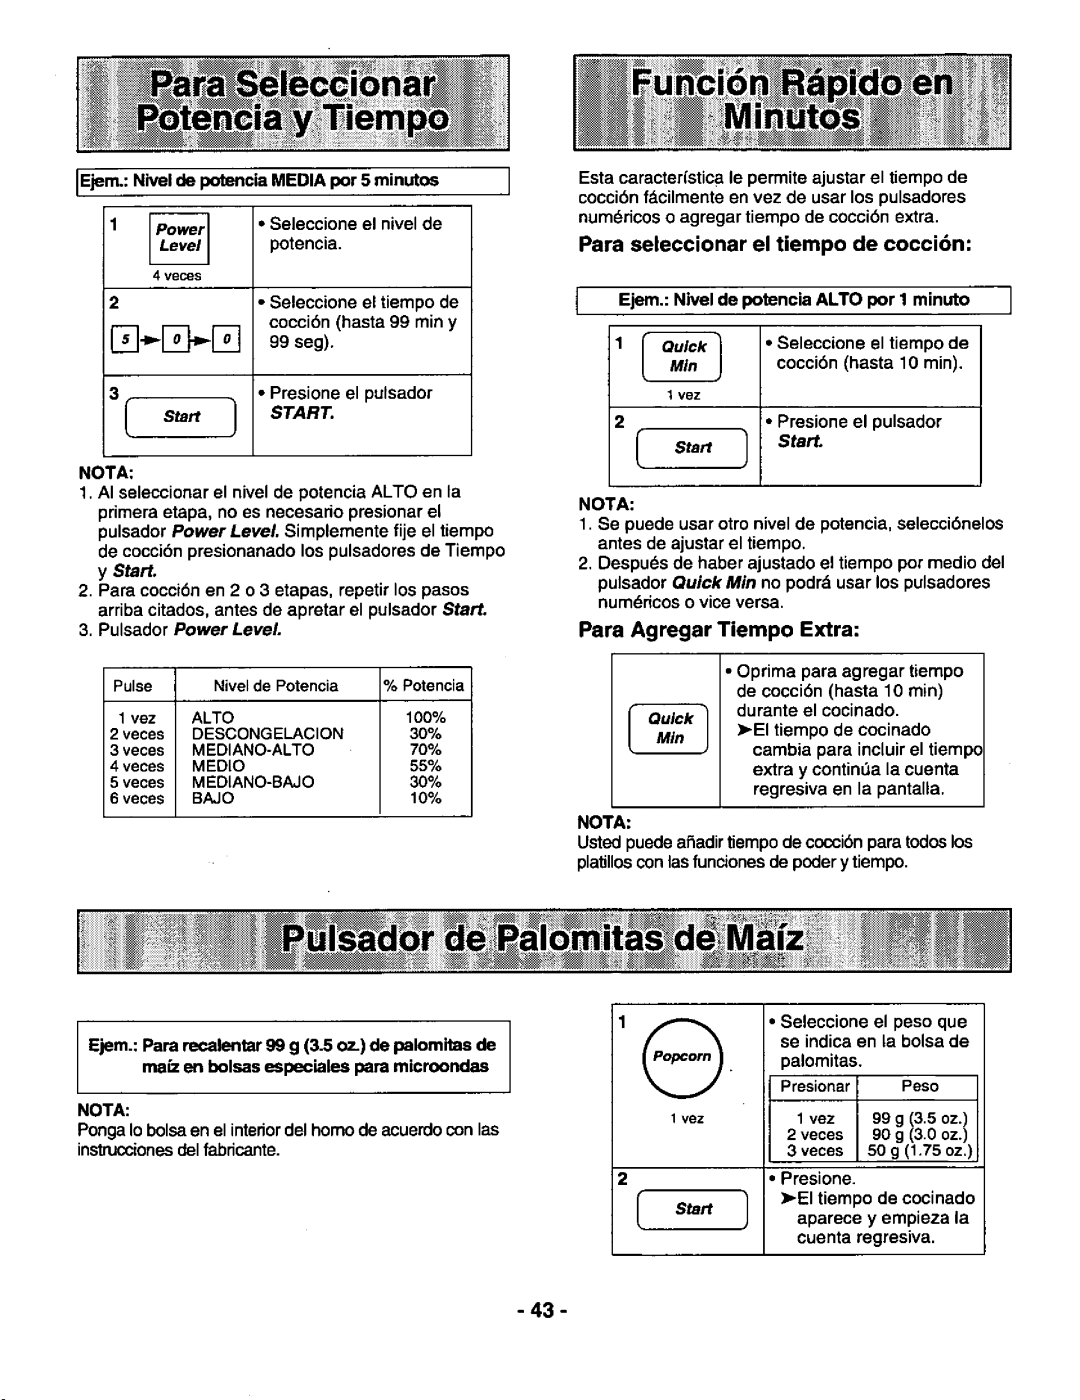 Panasonic NN-N688, NN-N588 manual 